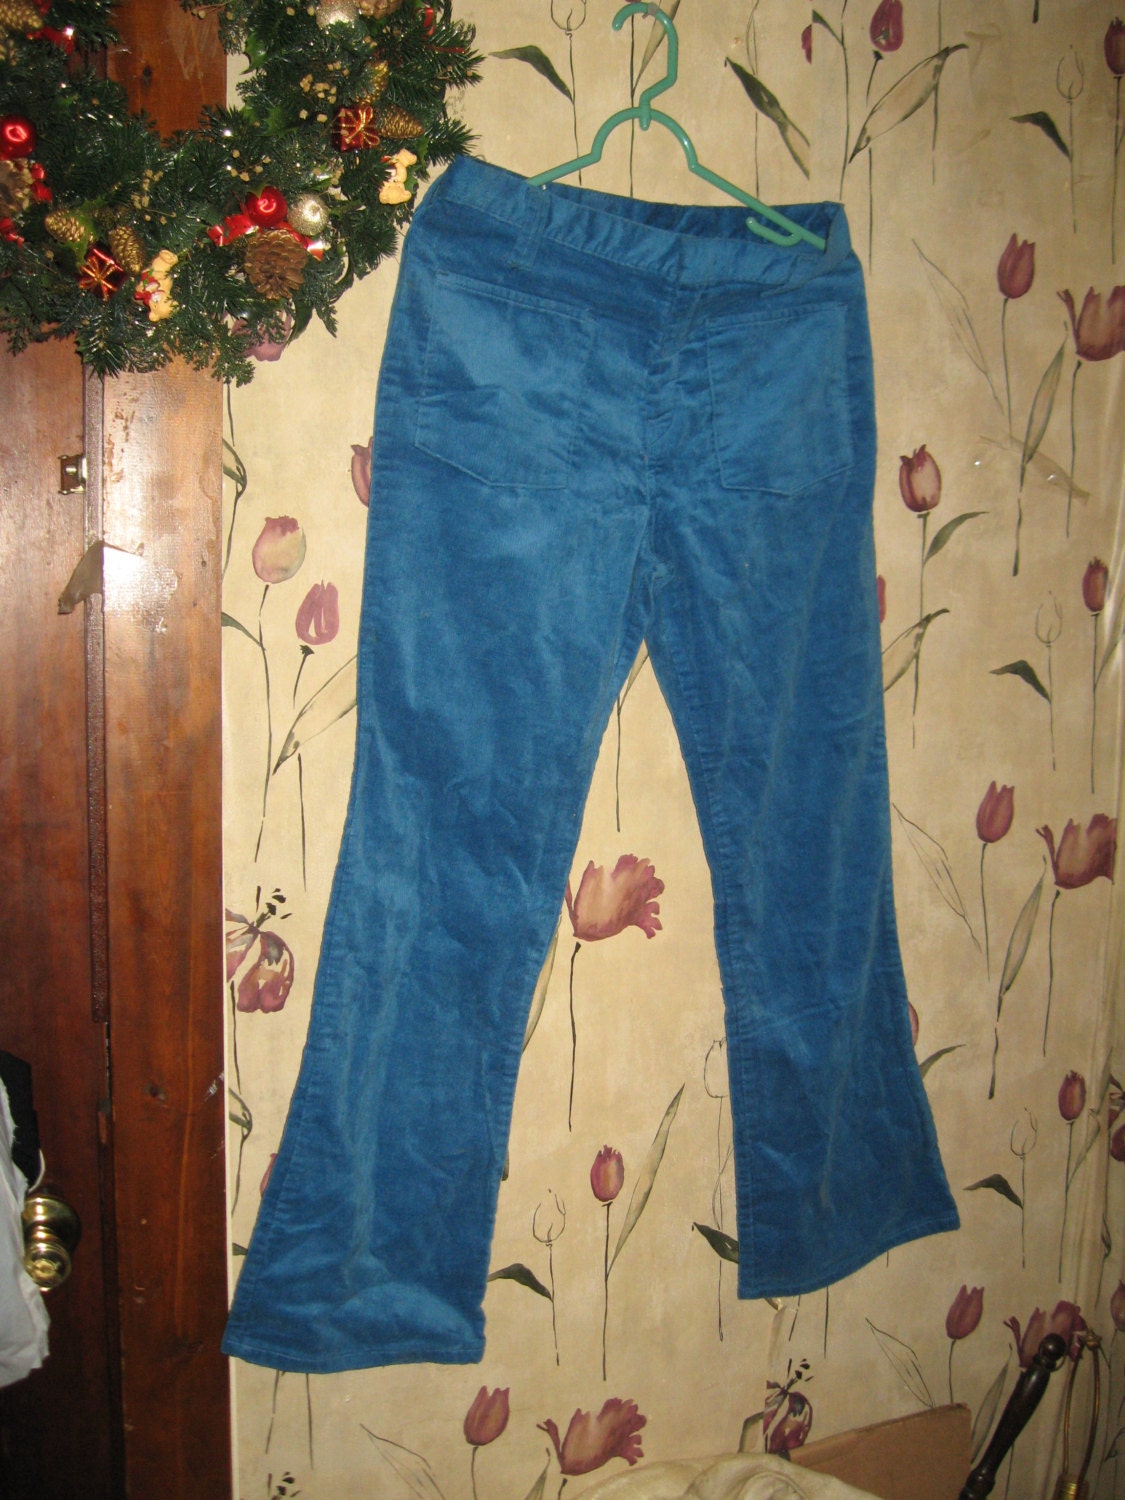 Vintage 1970s blue corduroy hippie bell bottom jeans